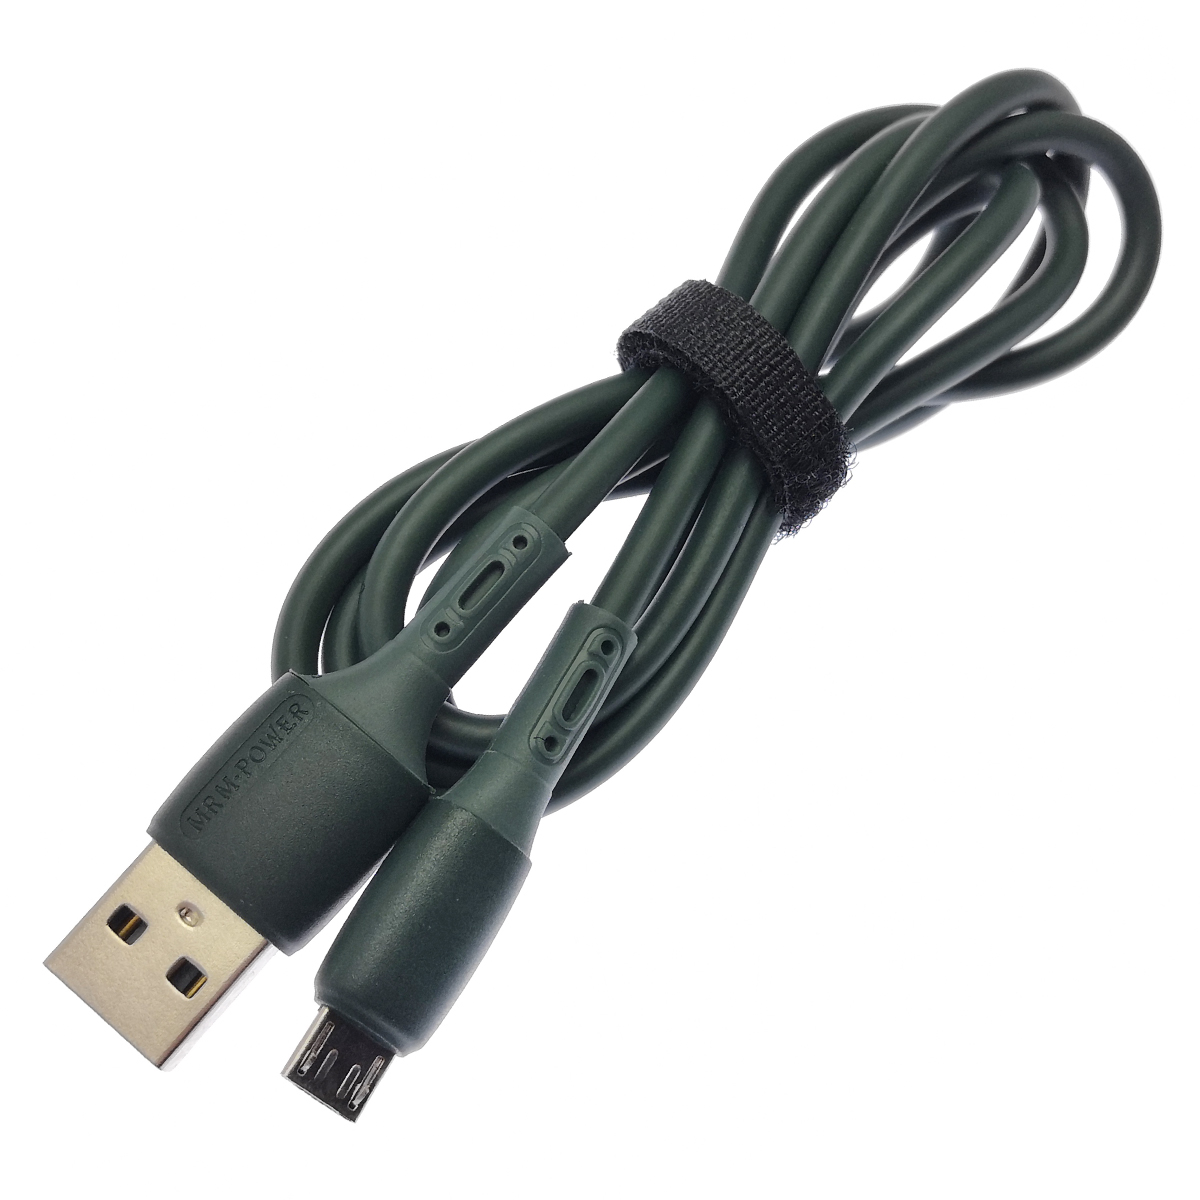 Кабель MRM G6 Micro USB, длина 1 метр, цвет темно зеленый